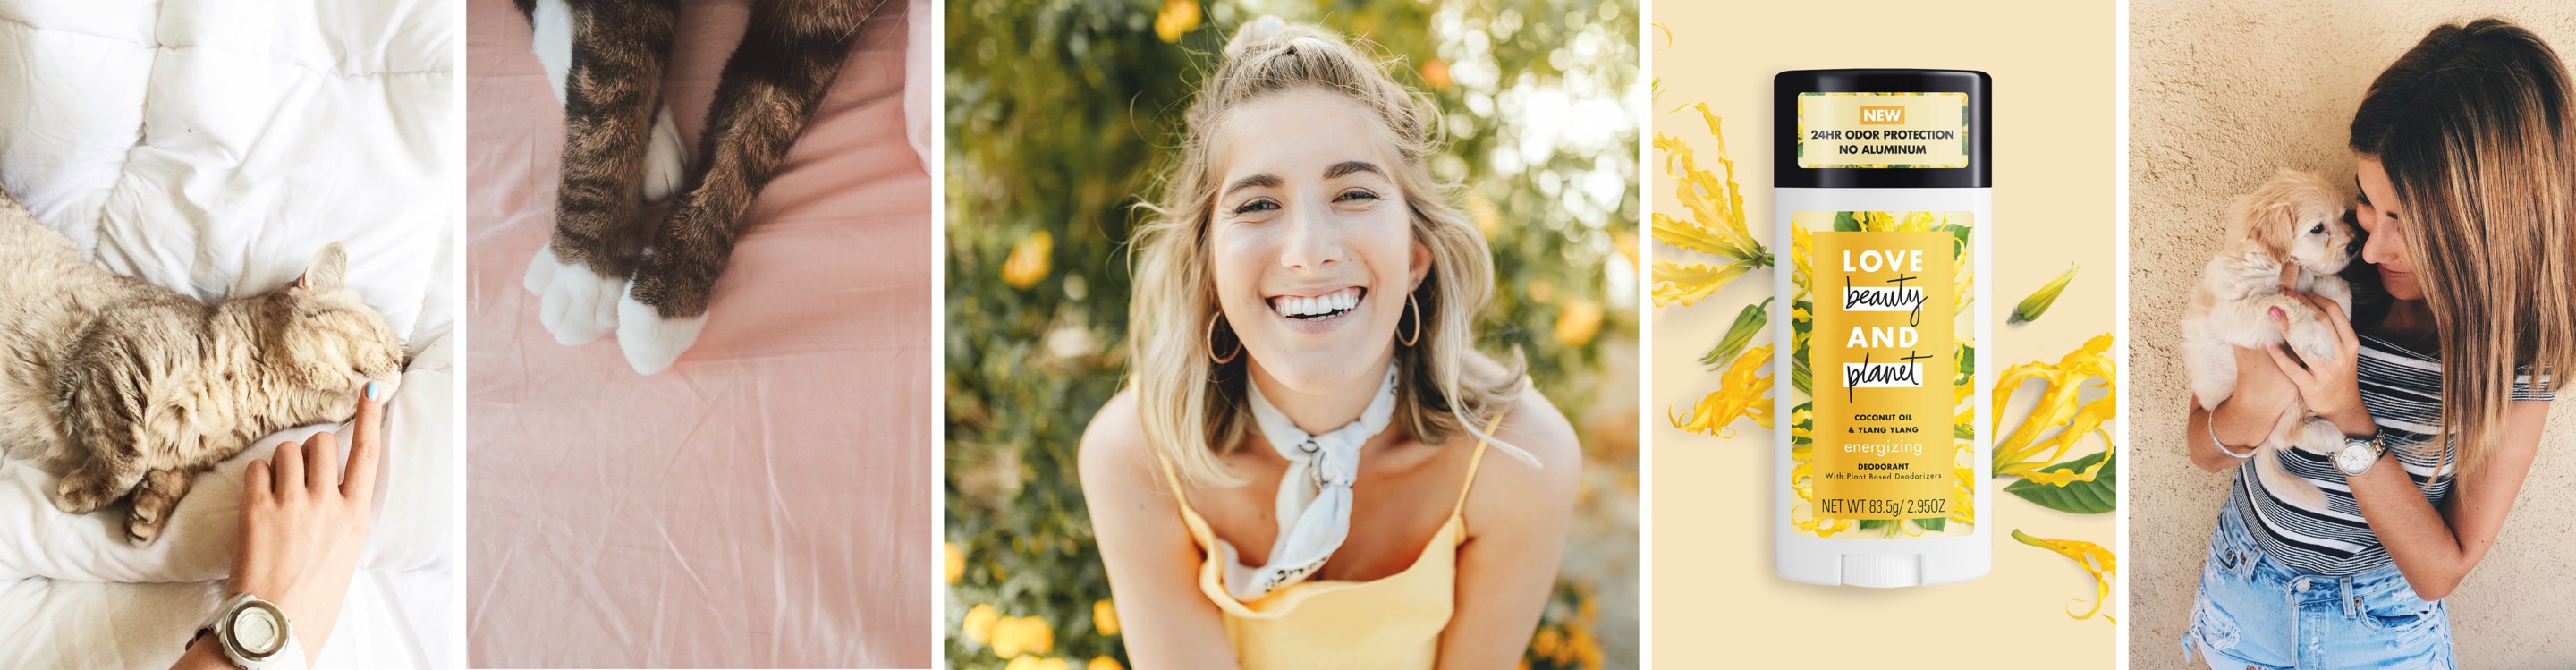 Benefits of Vegan Deodorant: Header Image Featuring Woman Smiling and Love Beauty and Planet Vegan Deodorant Ylang Ylang